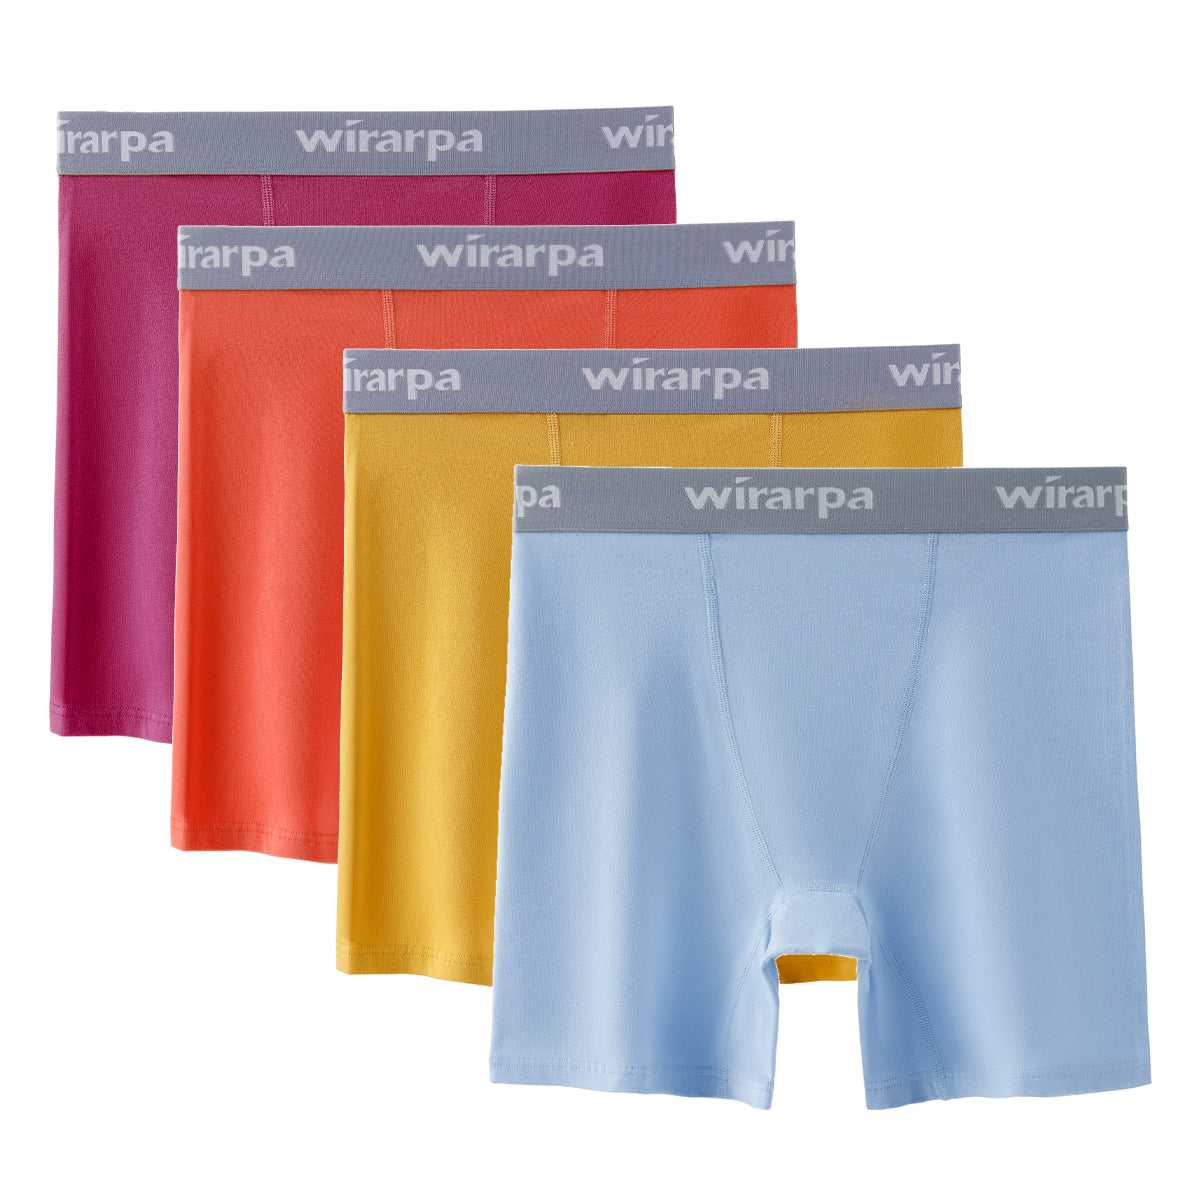 Wirarpa Women's Cotton Anti Chafing Boy Shorts Panties 5.5" Inseam 4 Pack